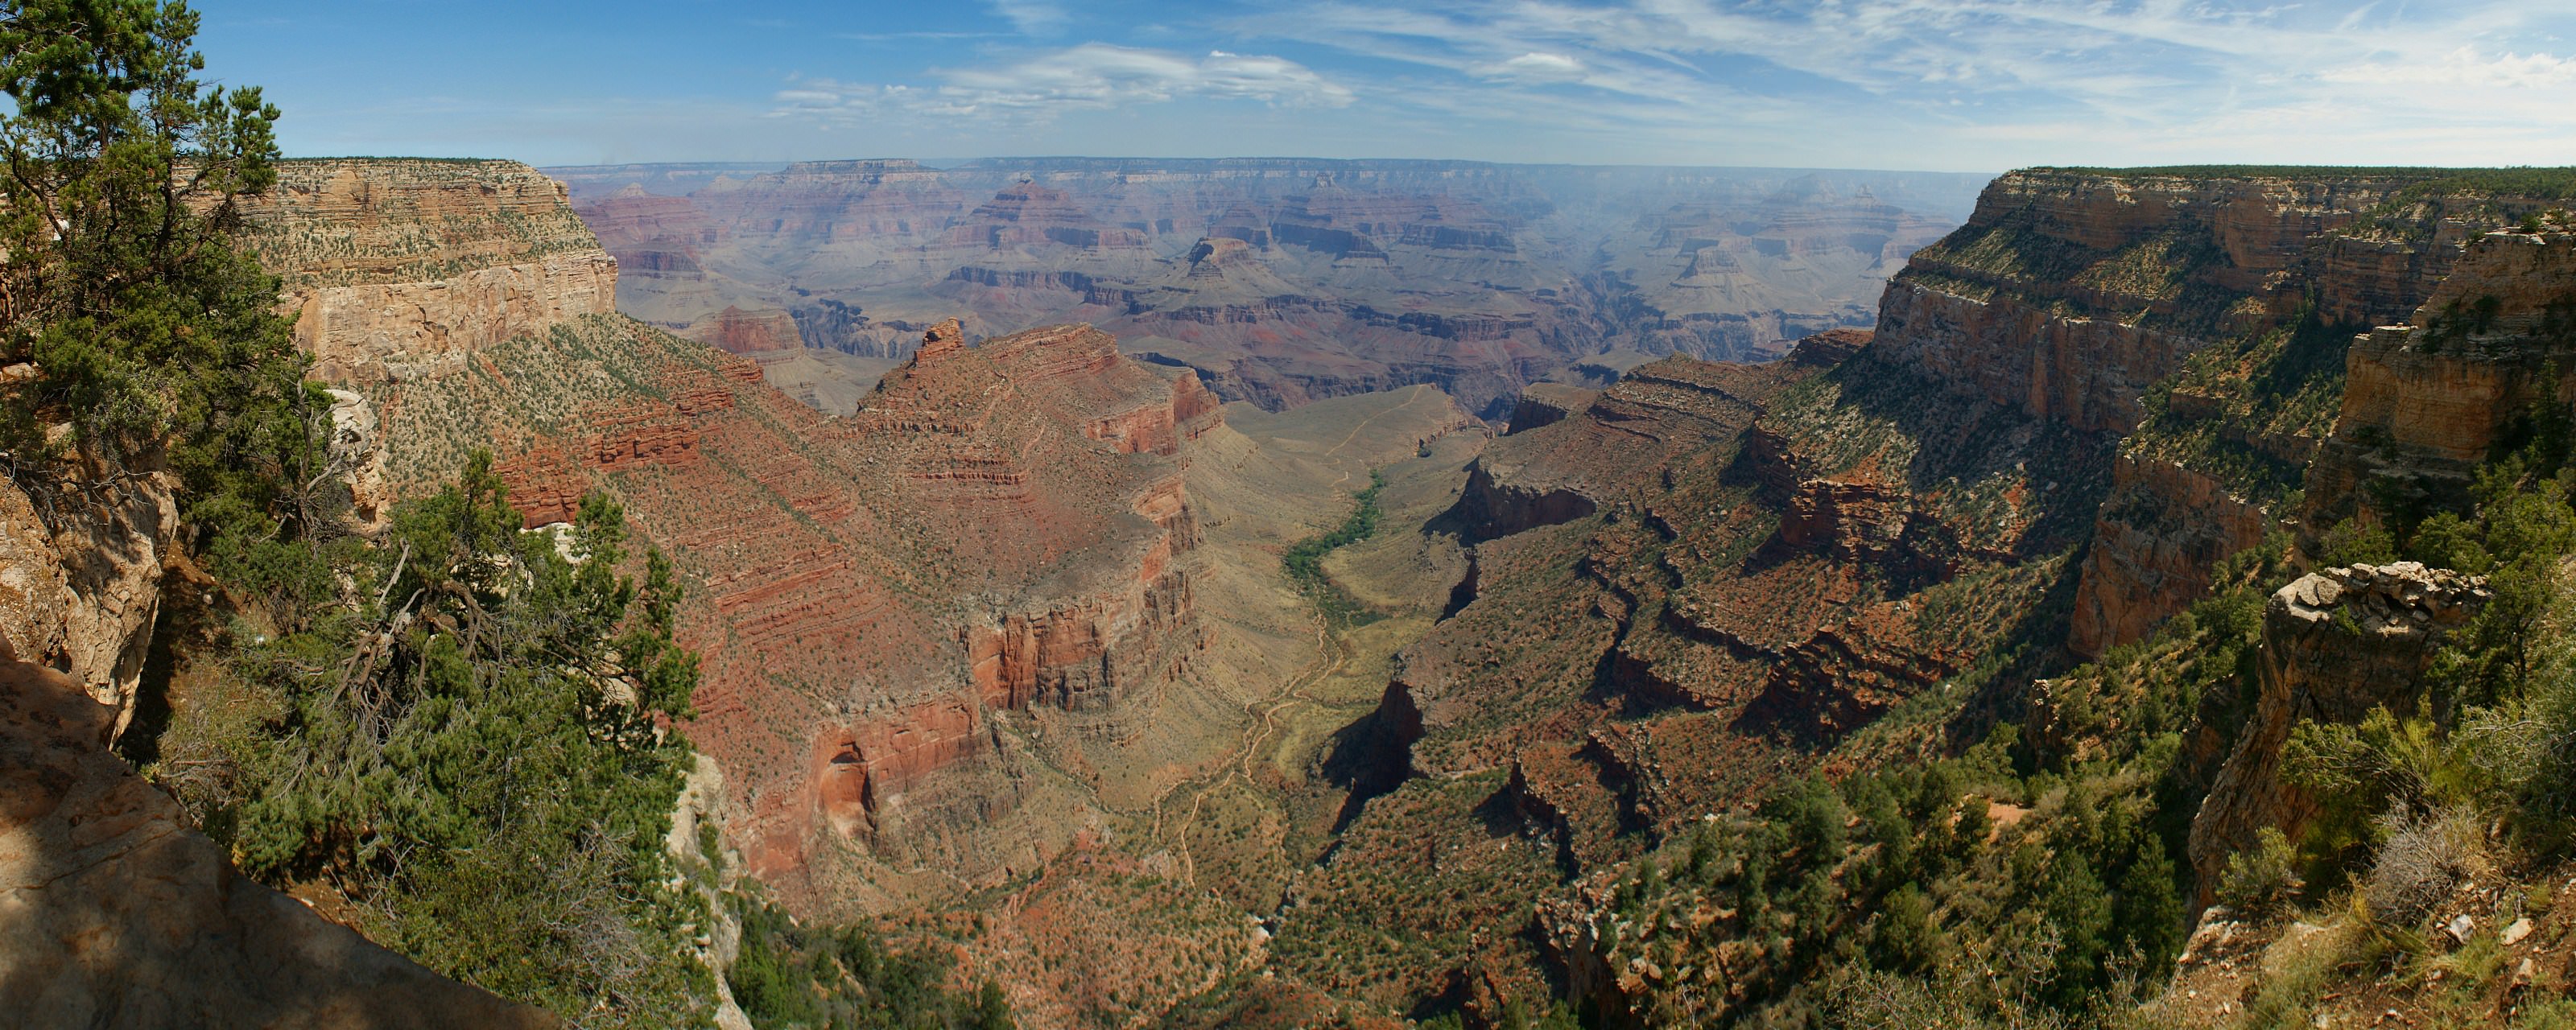 Canyons Panorama du Grand Canyon